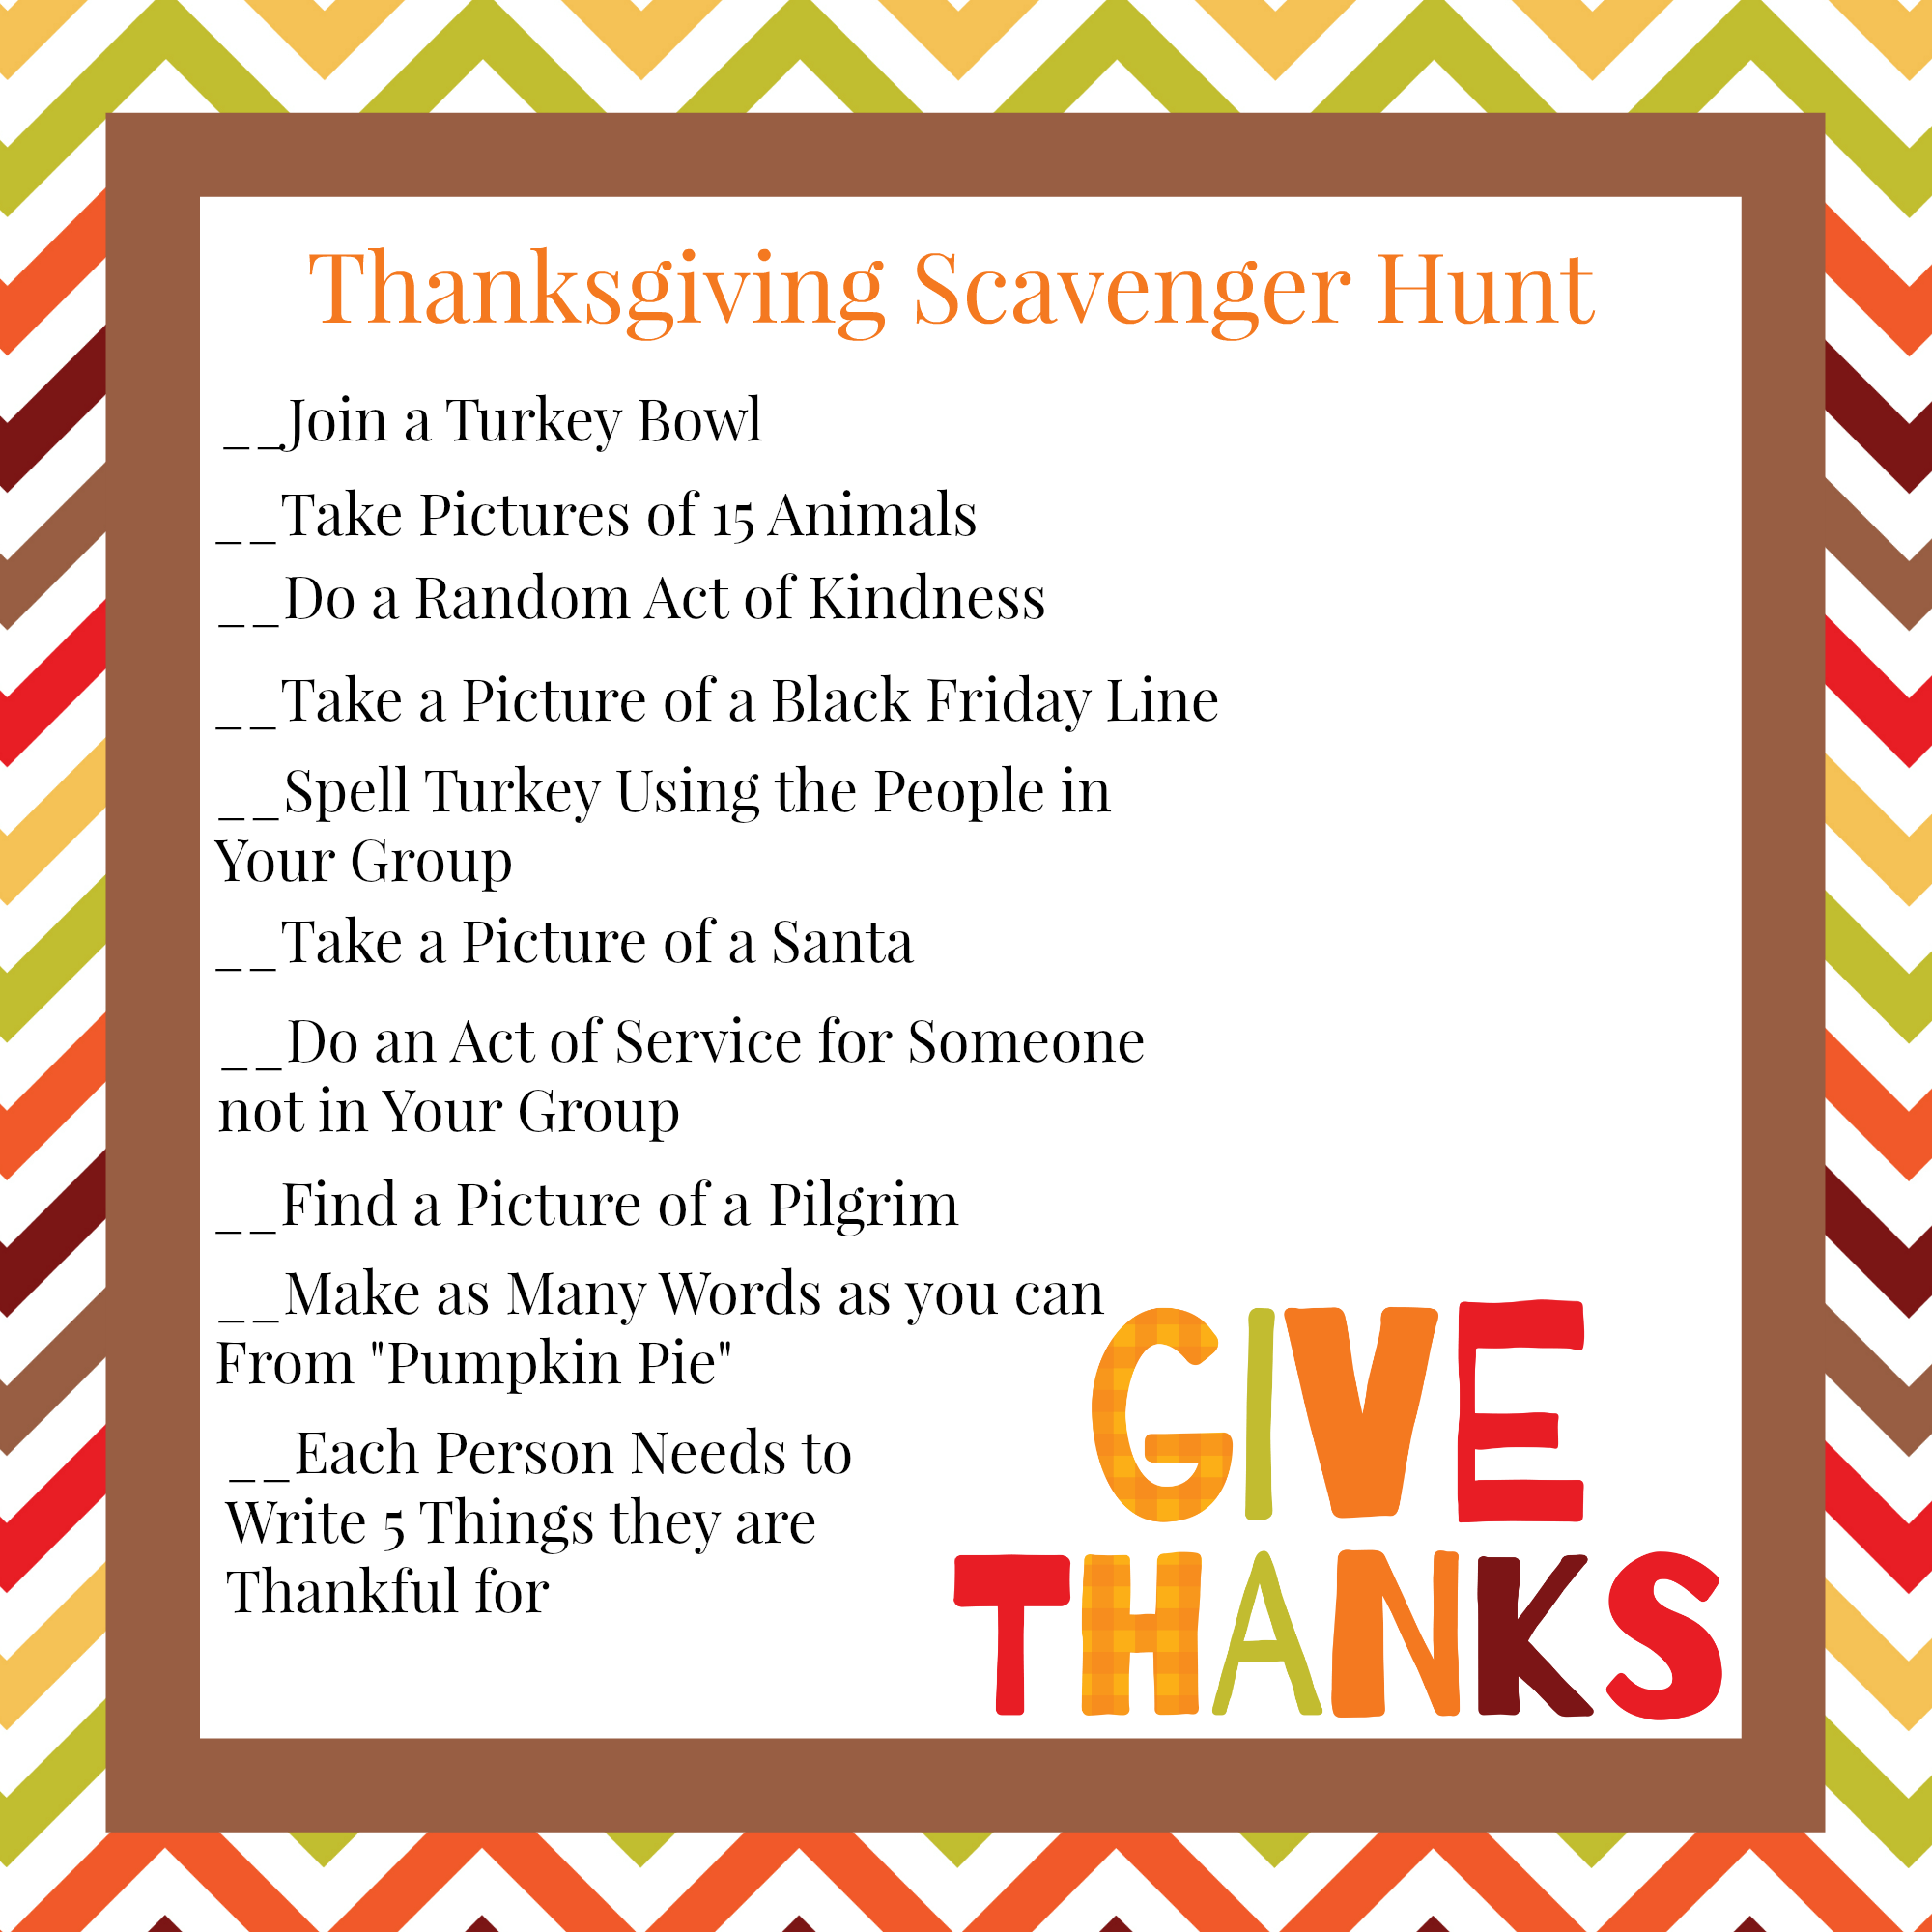 Fun Thanksgiving Family Games: Scavenger Hunt Fun Squared